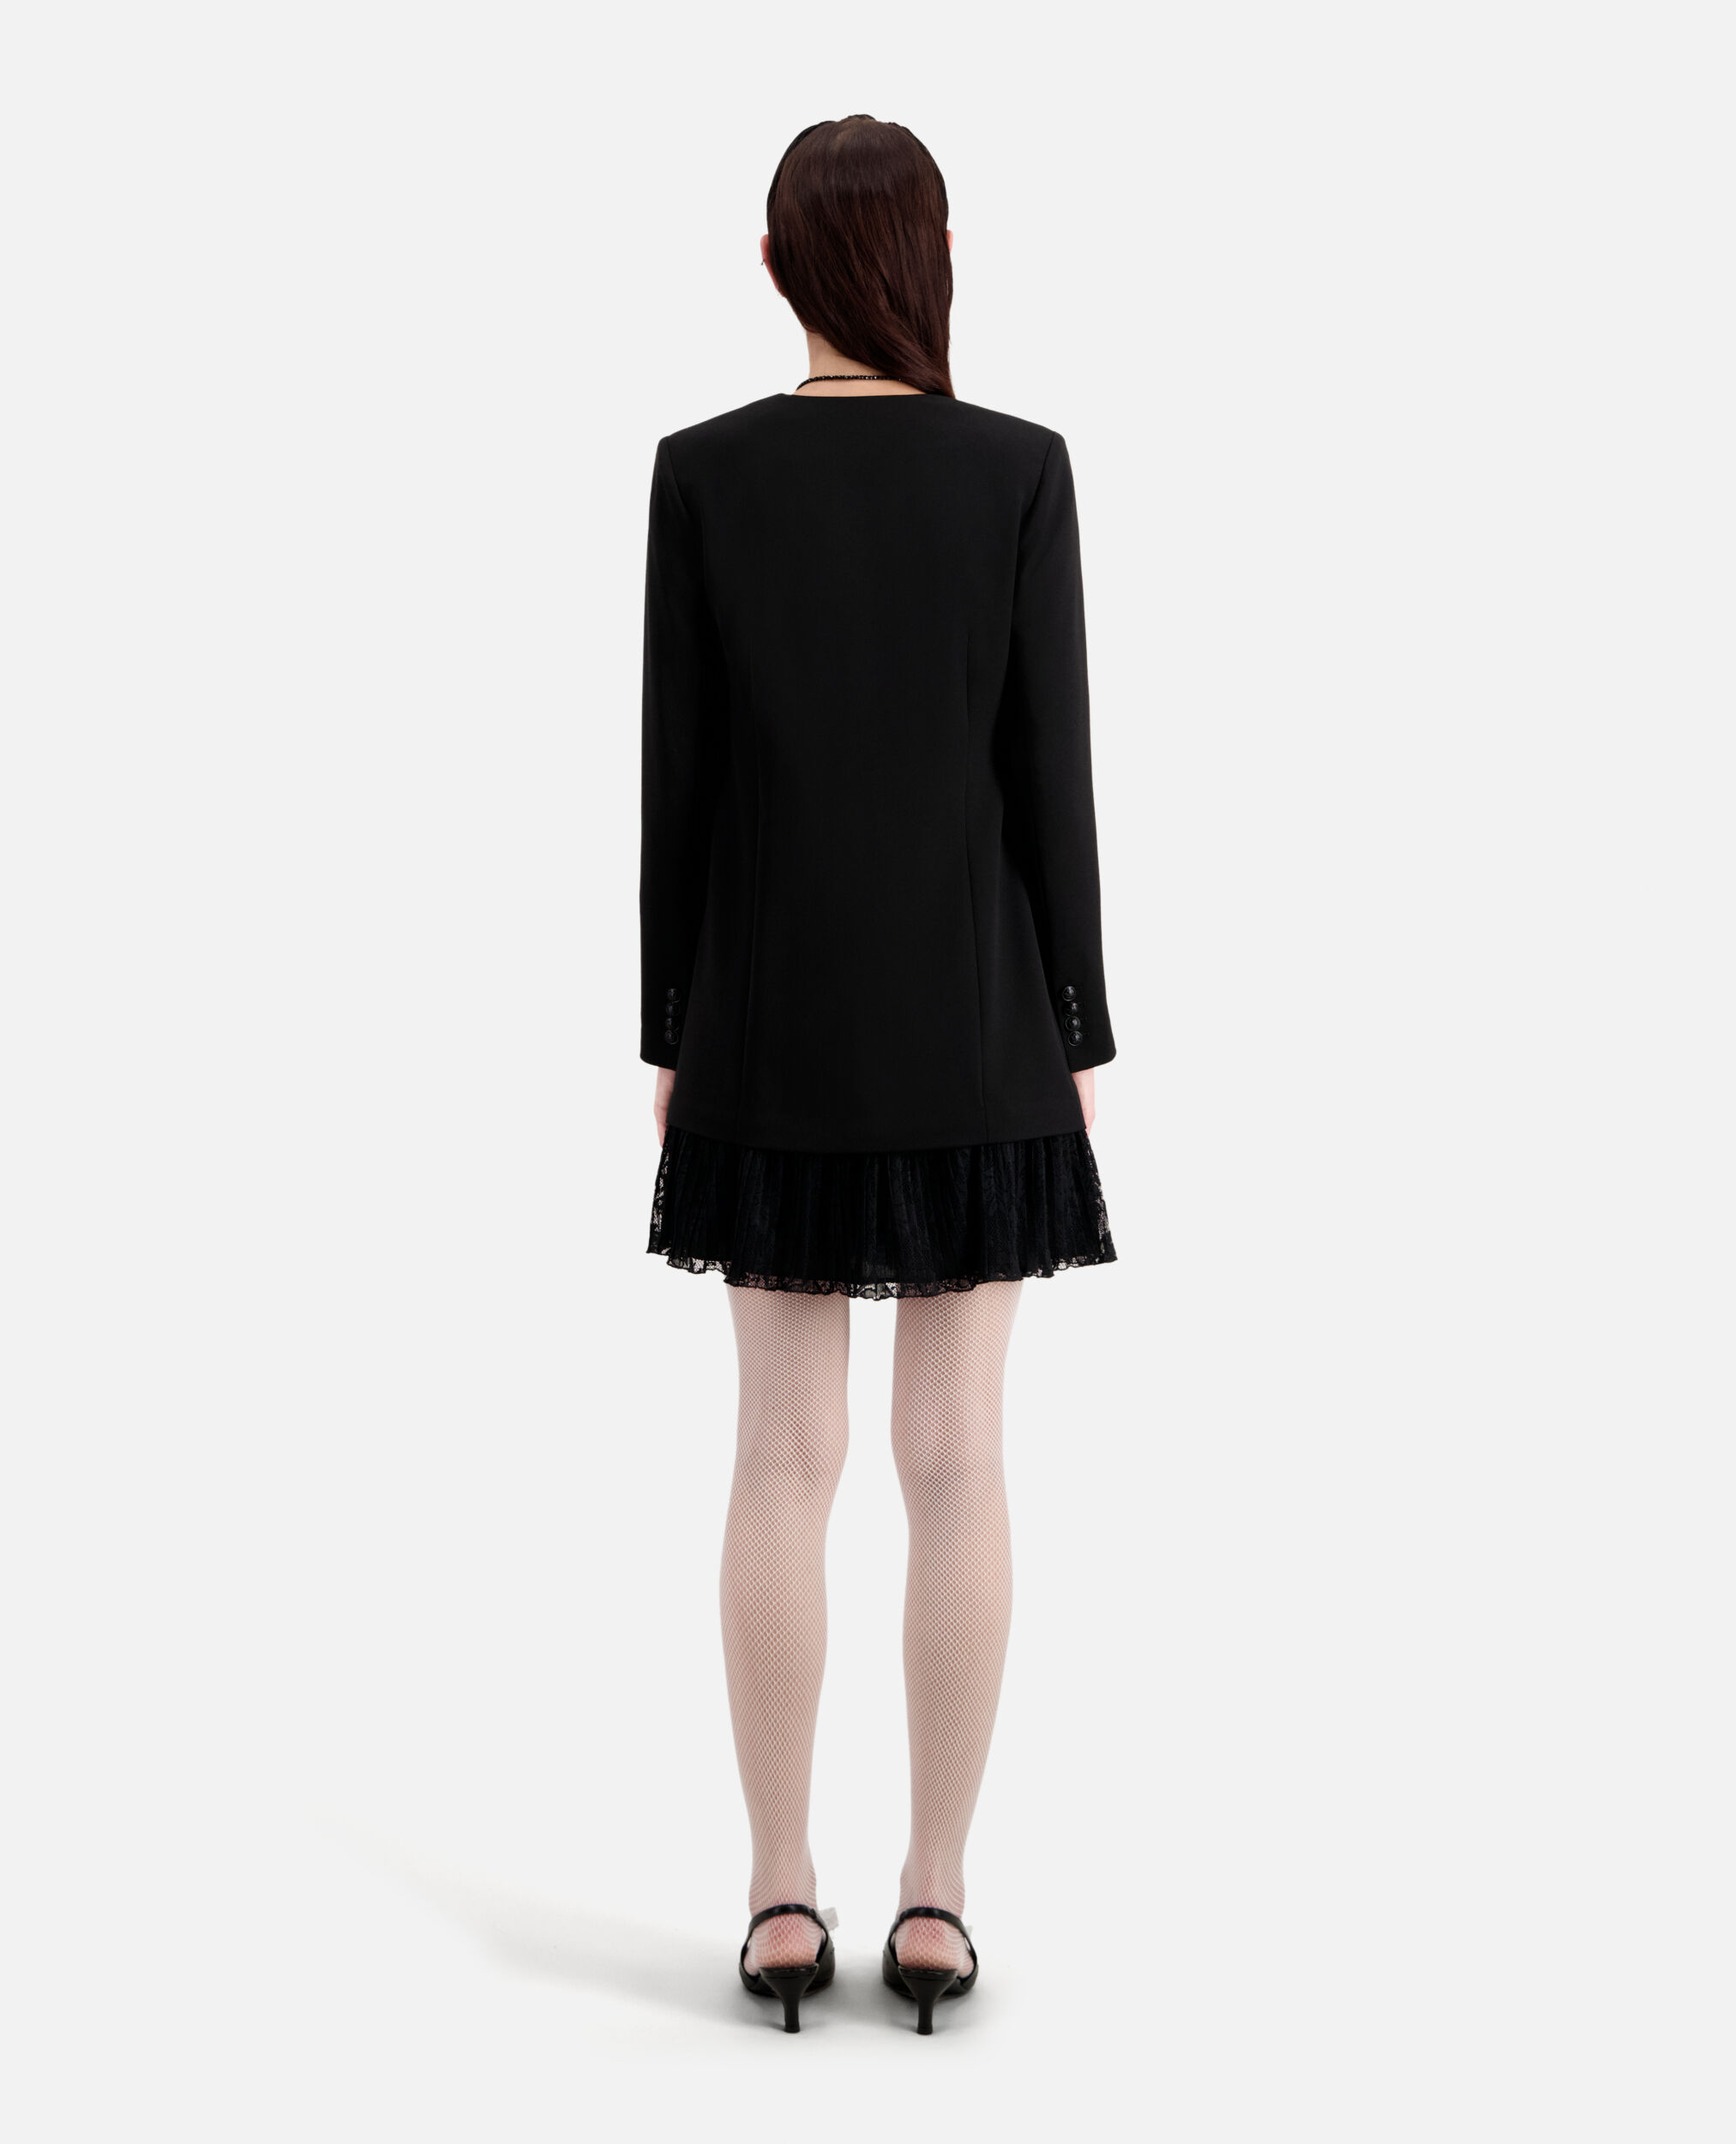 Robe courte noire effet tailleur en crêpe et dentelle, BLACK, hi-res image number null